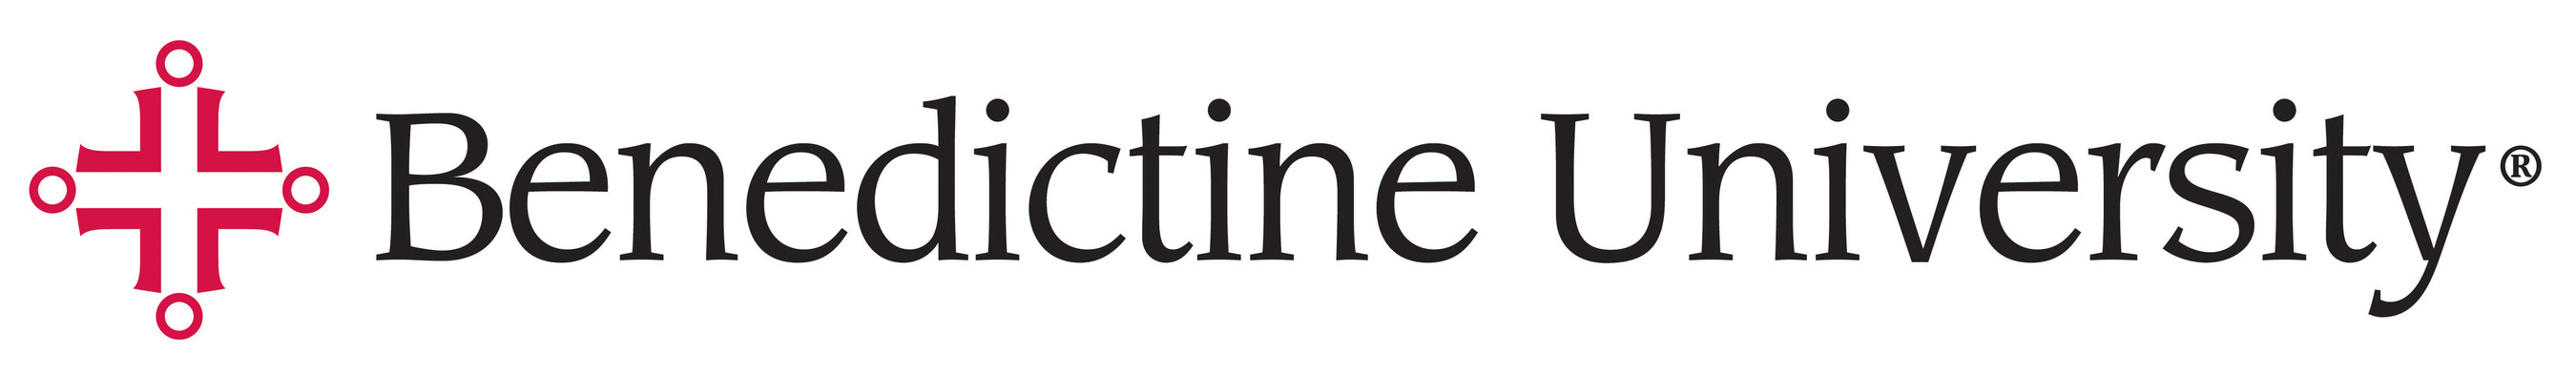 Benedictine University Logo. (PRNewsFoto/Benedictine University) (PRNewsFoto/)